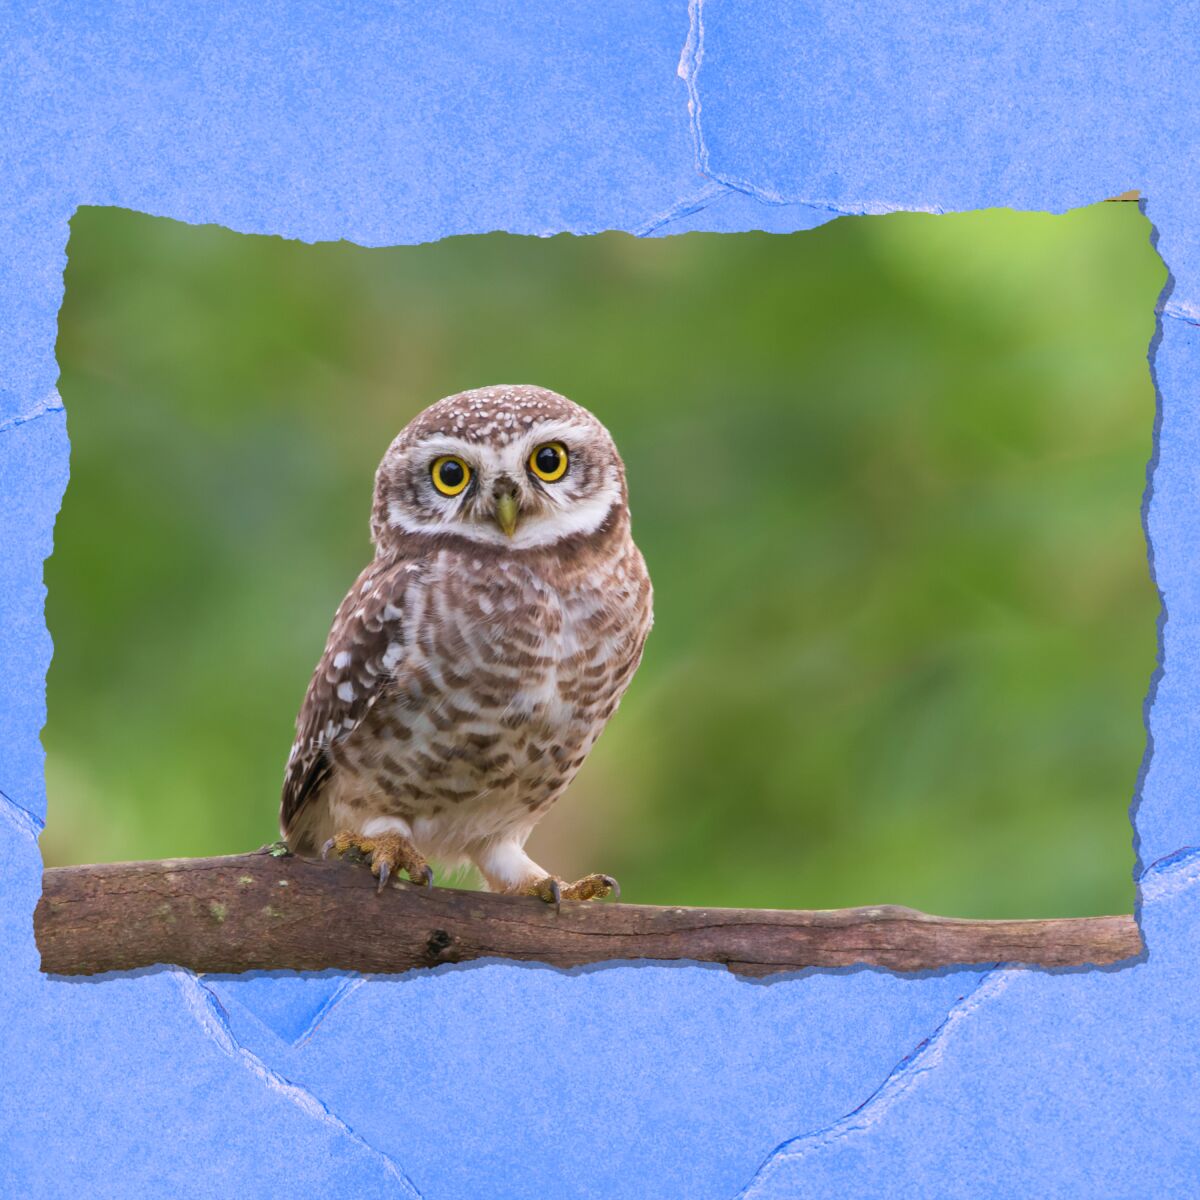 Closeup of an owl on a branch.